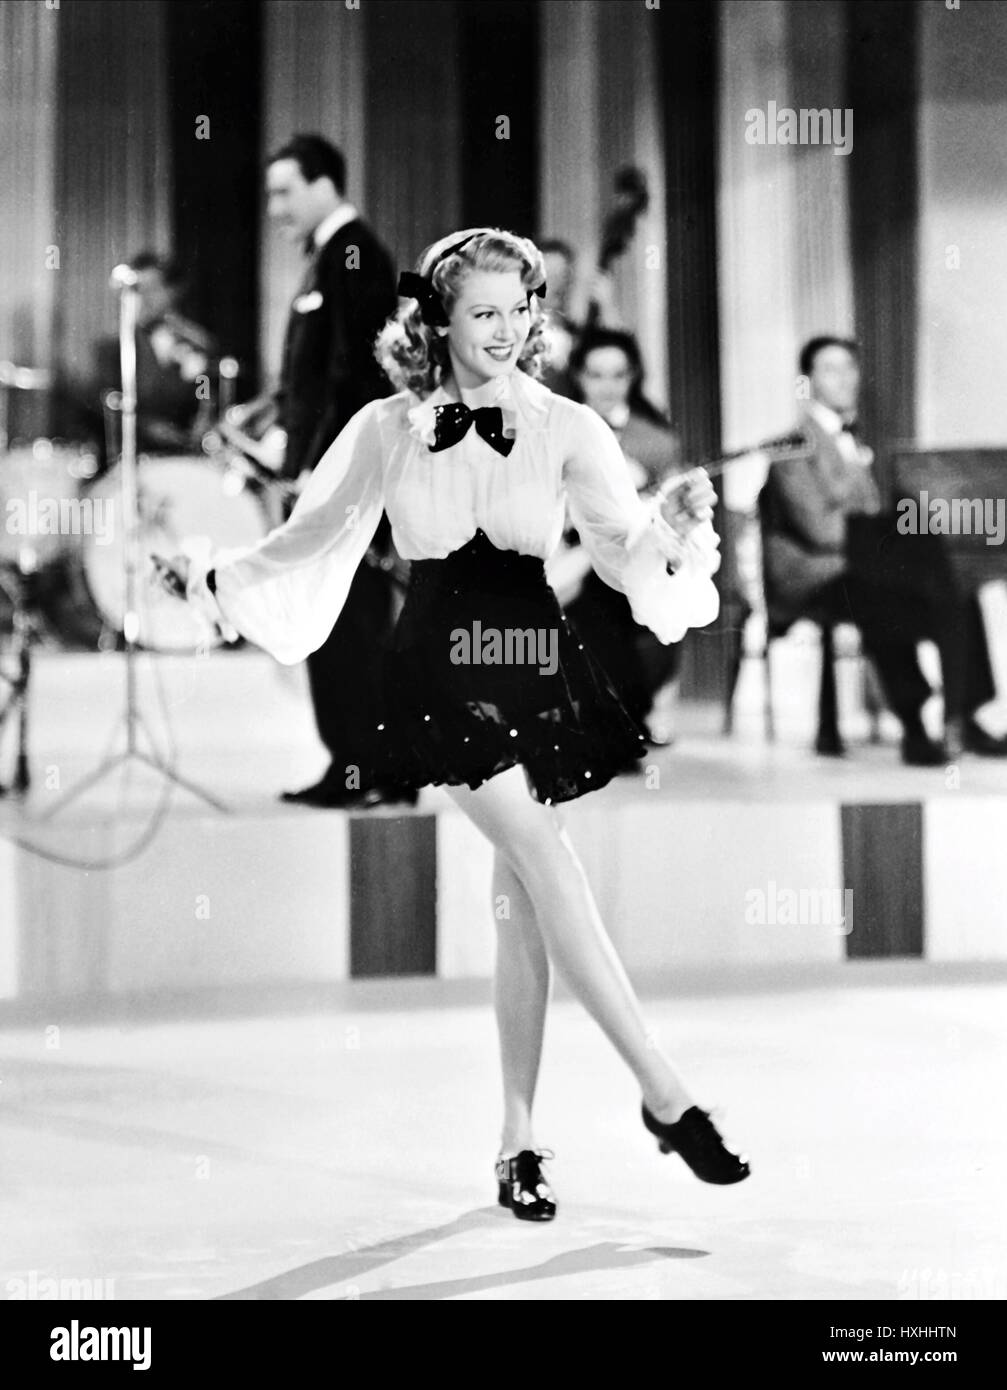 LANA TURNER DANCING CO-ED (1939 Stock Photo - Alamy